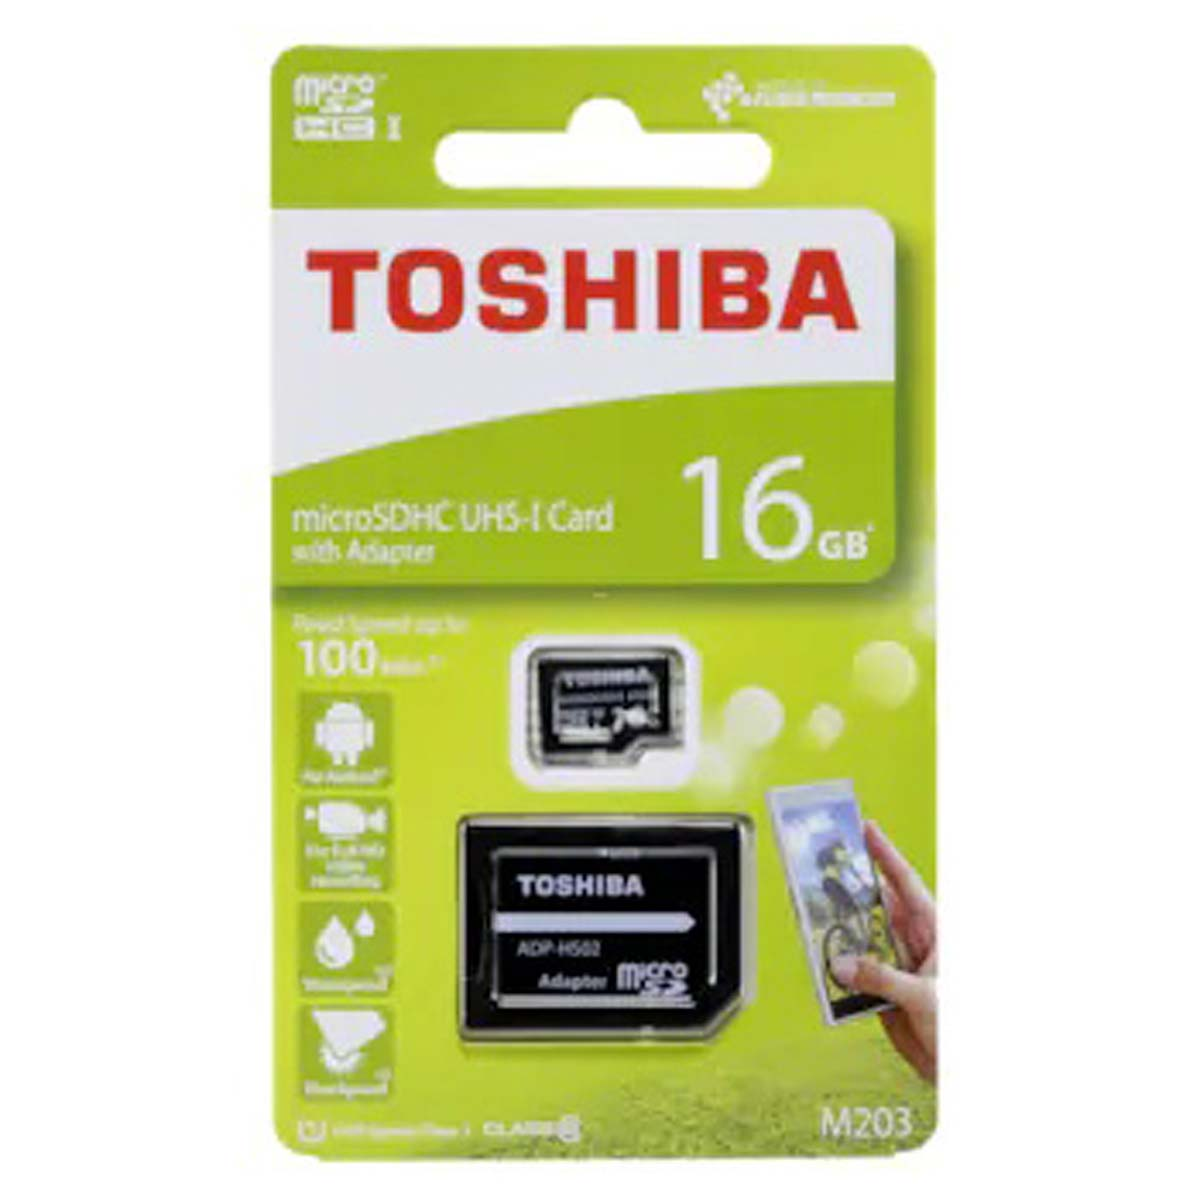 TOSHIBA 41094, Micro-SDHC Speicherkarte, 16 GB, 100 Mbit/s